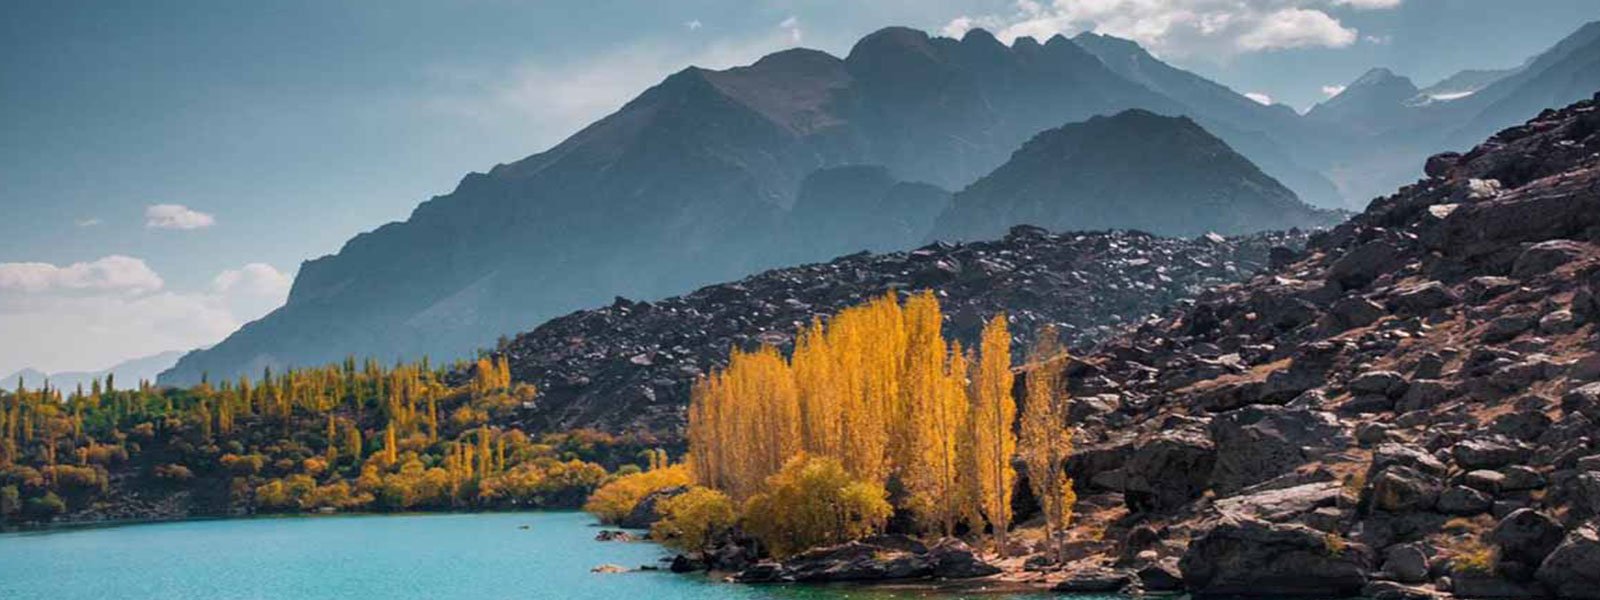 Skardu - The most beautiful Valley of Pakistan